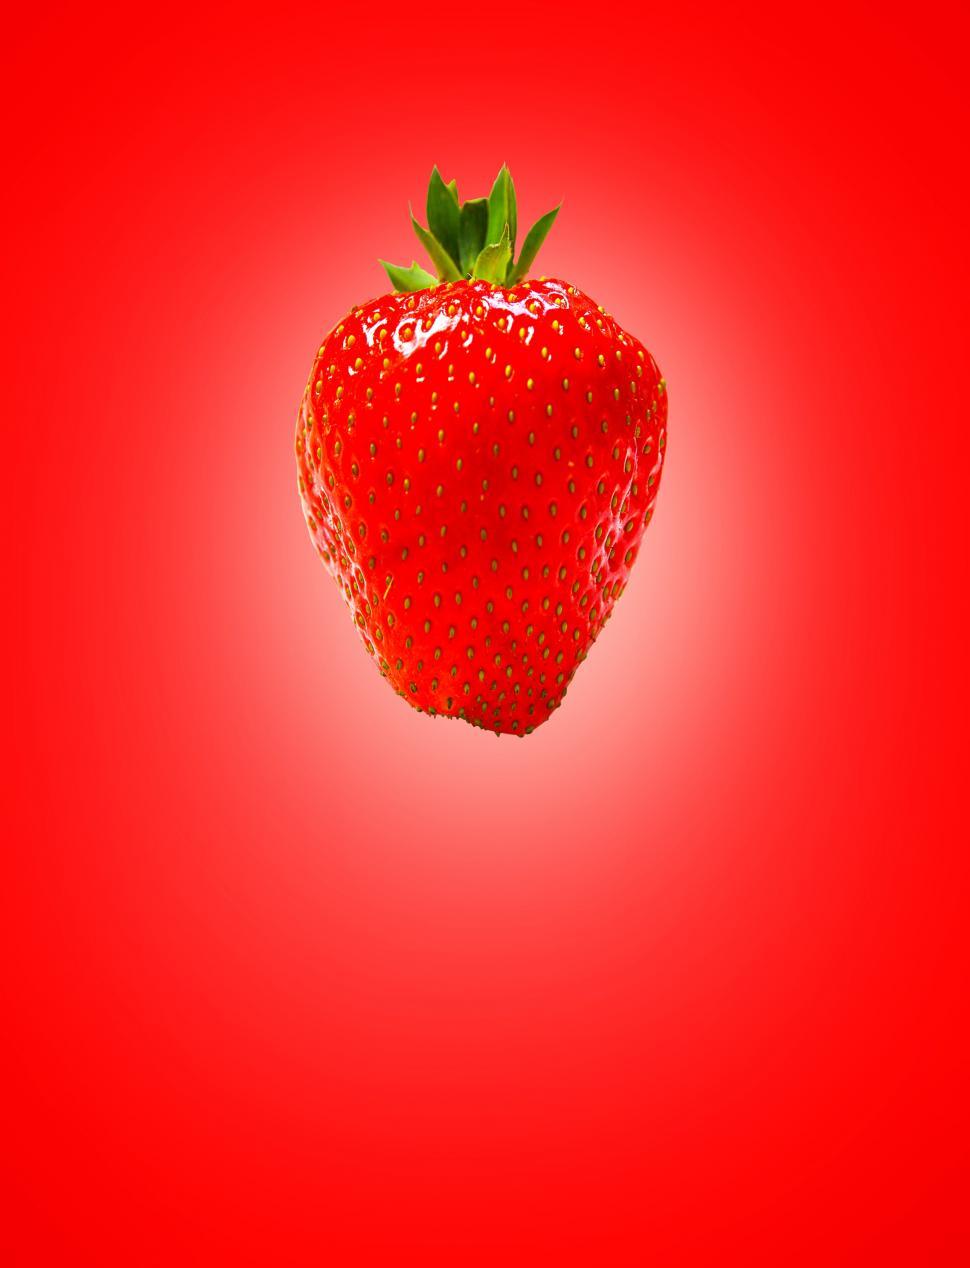 strawberries background